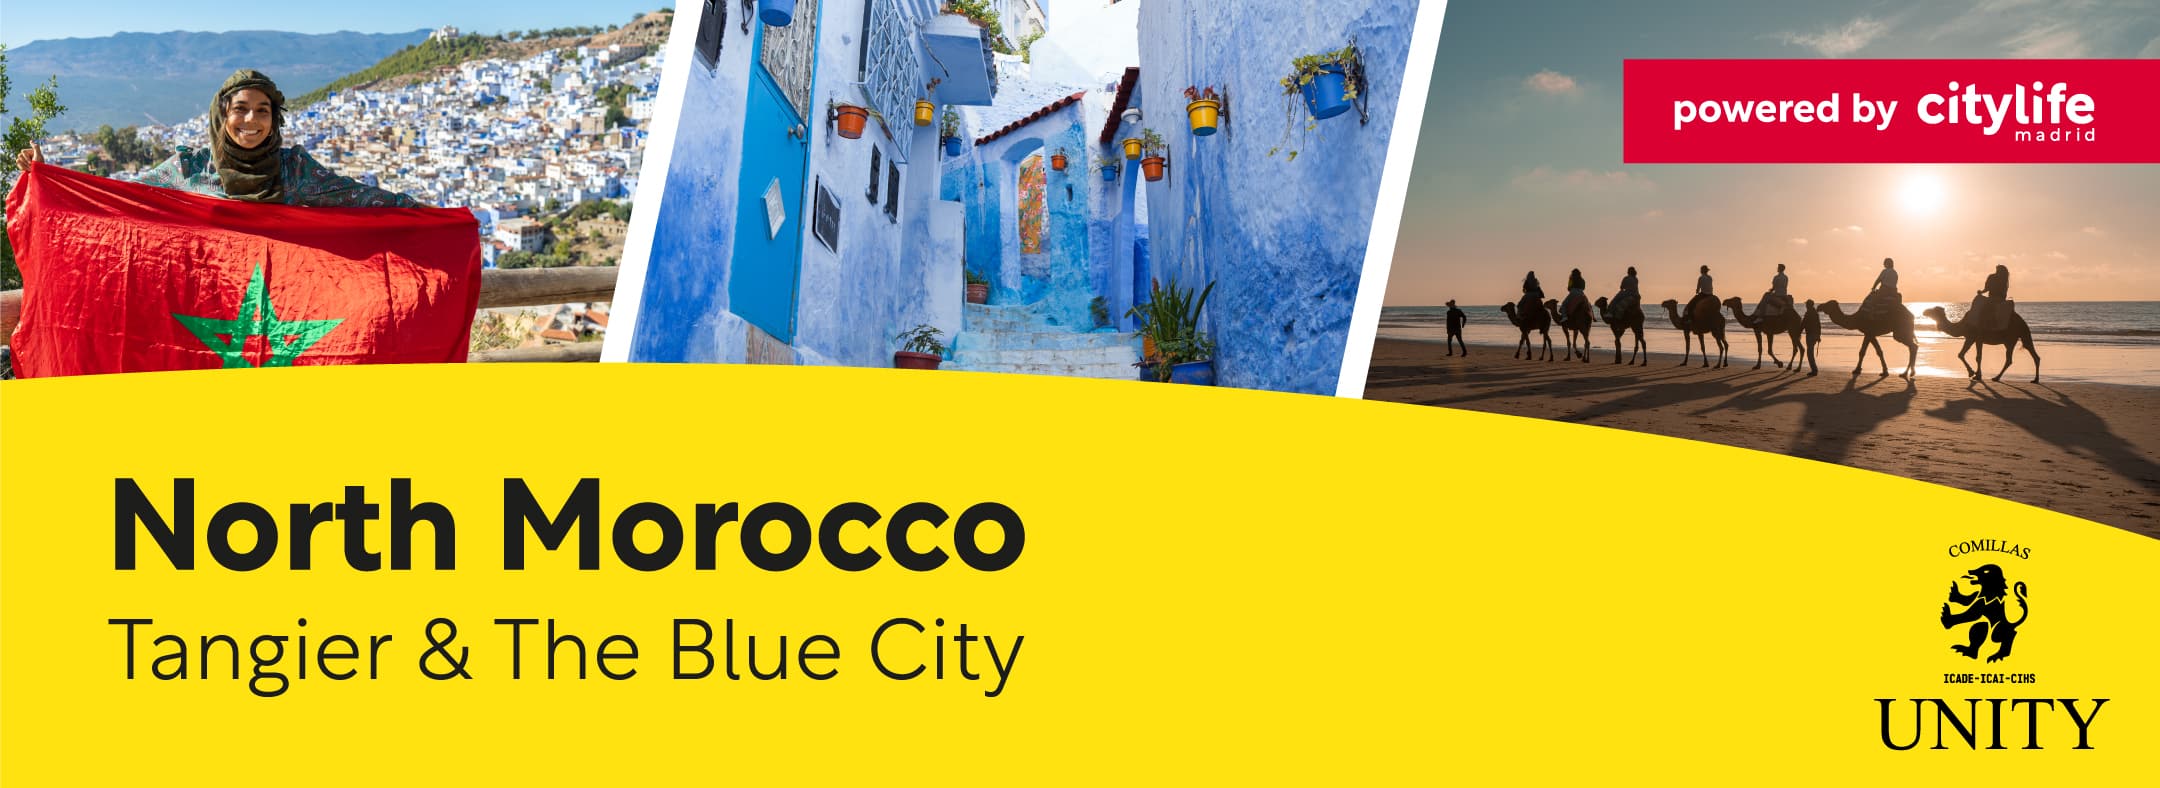 citylife-madrid-trips-north-morocco-unity-web-banner